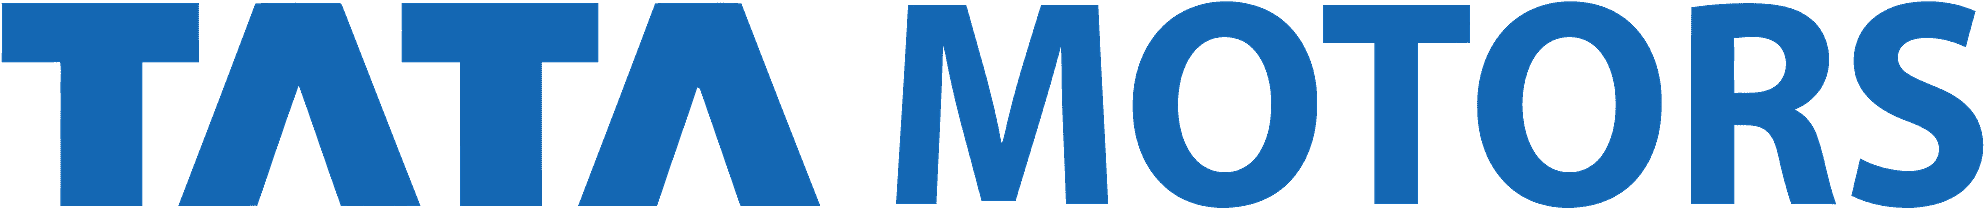 Tata Motors Logo Blue PNG image